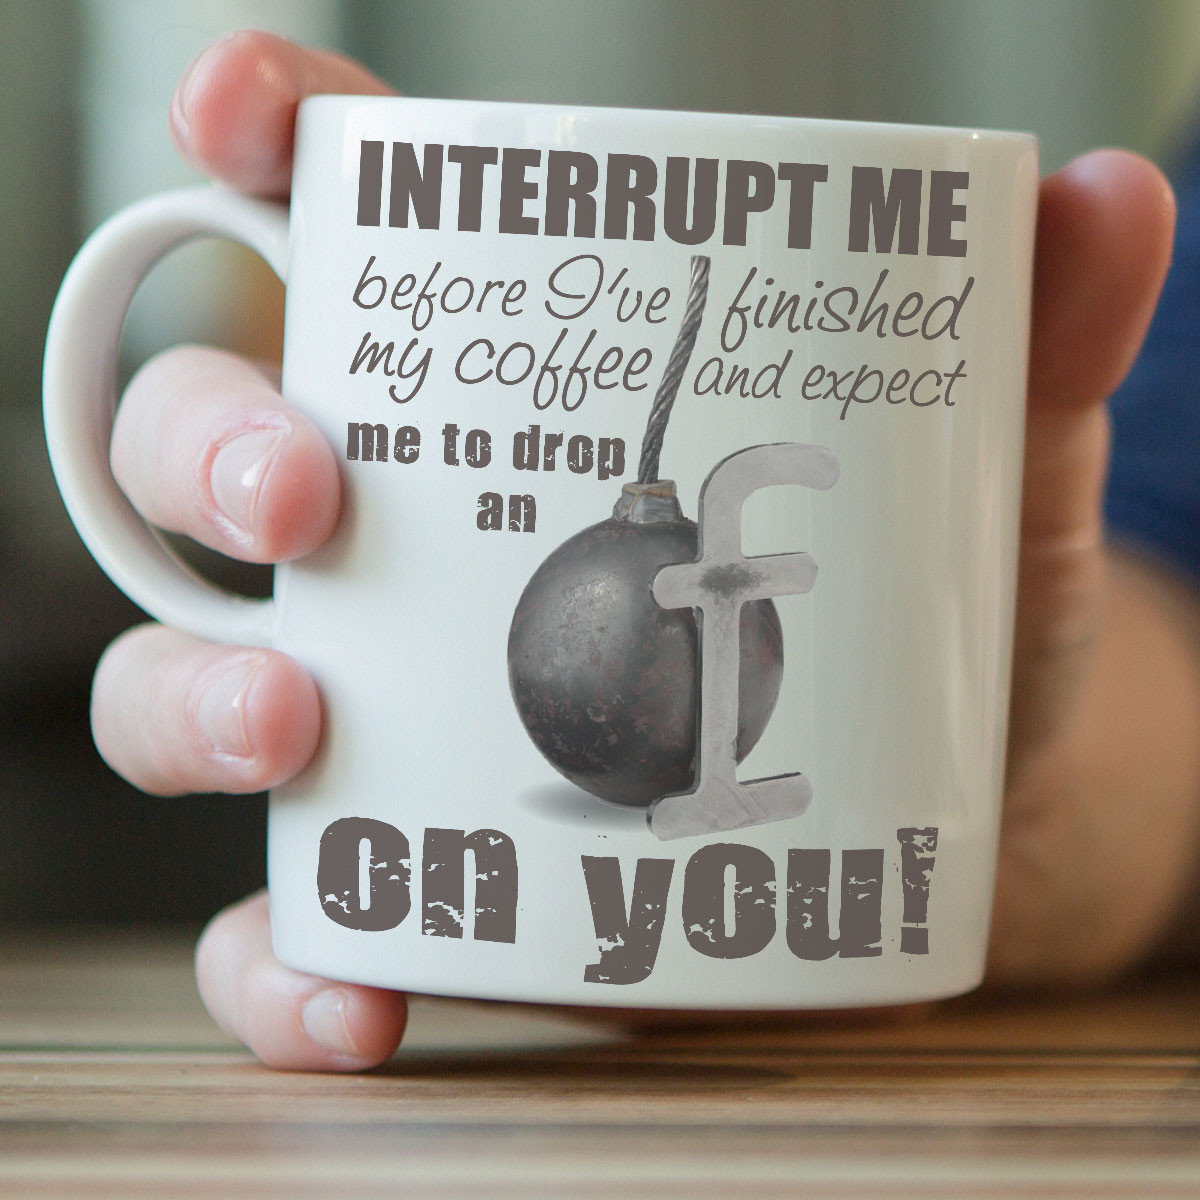 "Interrupt Me Before I've Finished My Coffee..." Mug